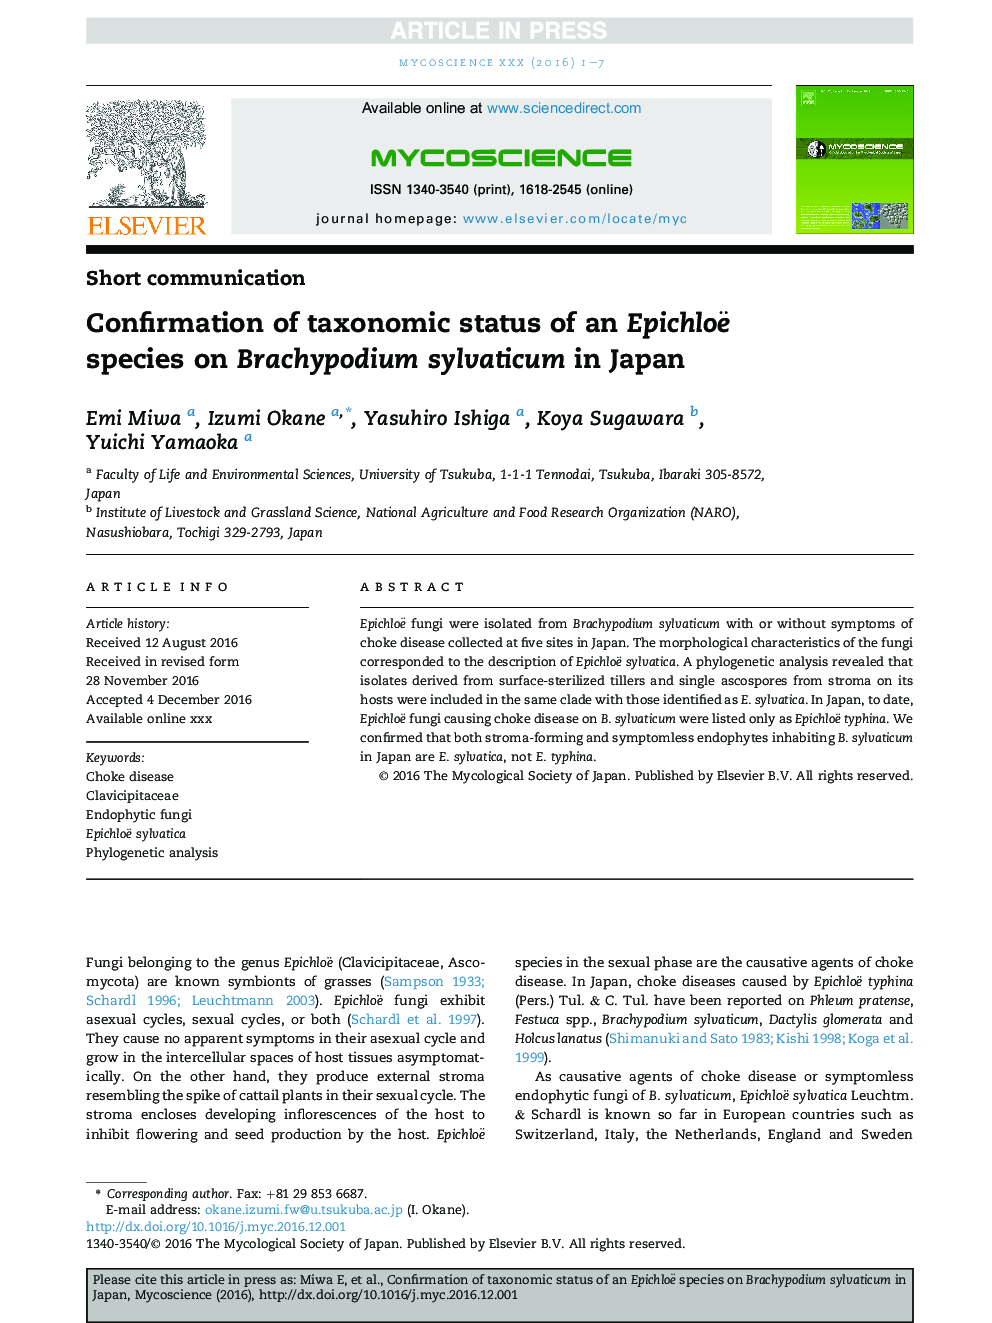 Confirmation of taxonomic status of an Epichloë species on Brachypodium sylvaticum in Japan